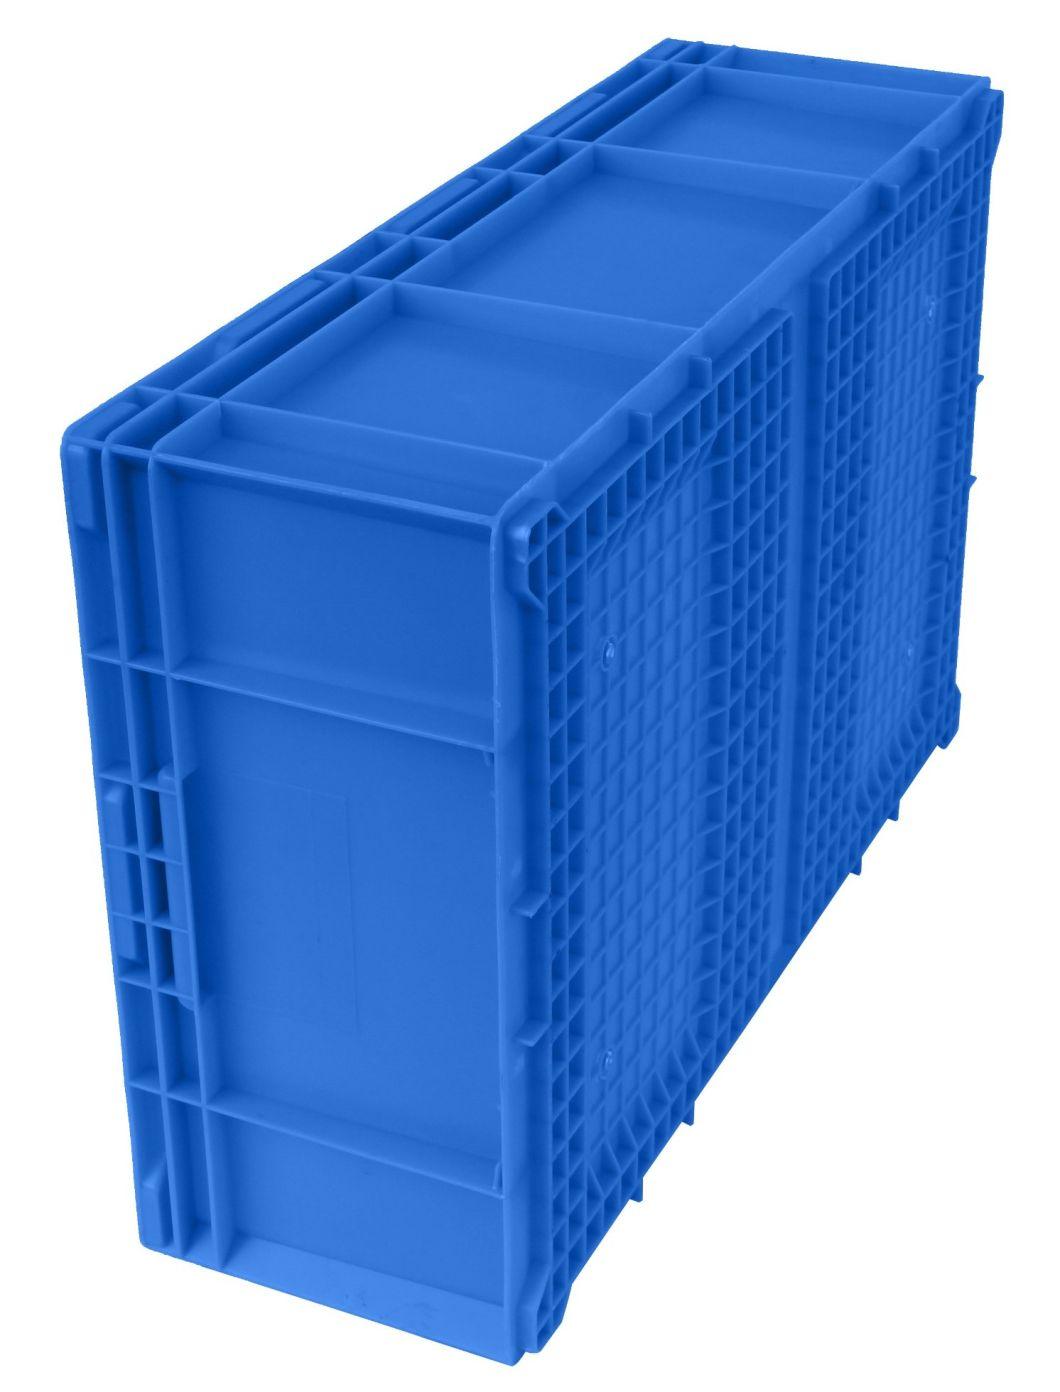 HP6c Plastic Turnover Logistics Container Box HP Standard Auto Parts Logistic Box Durable Opaque Plastic Storage Boxes